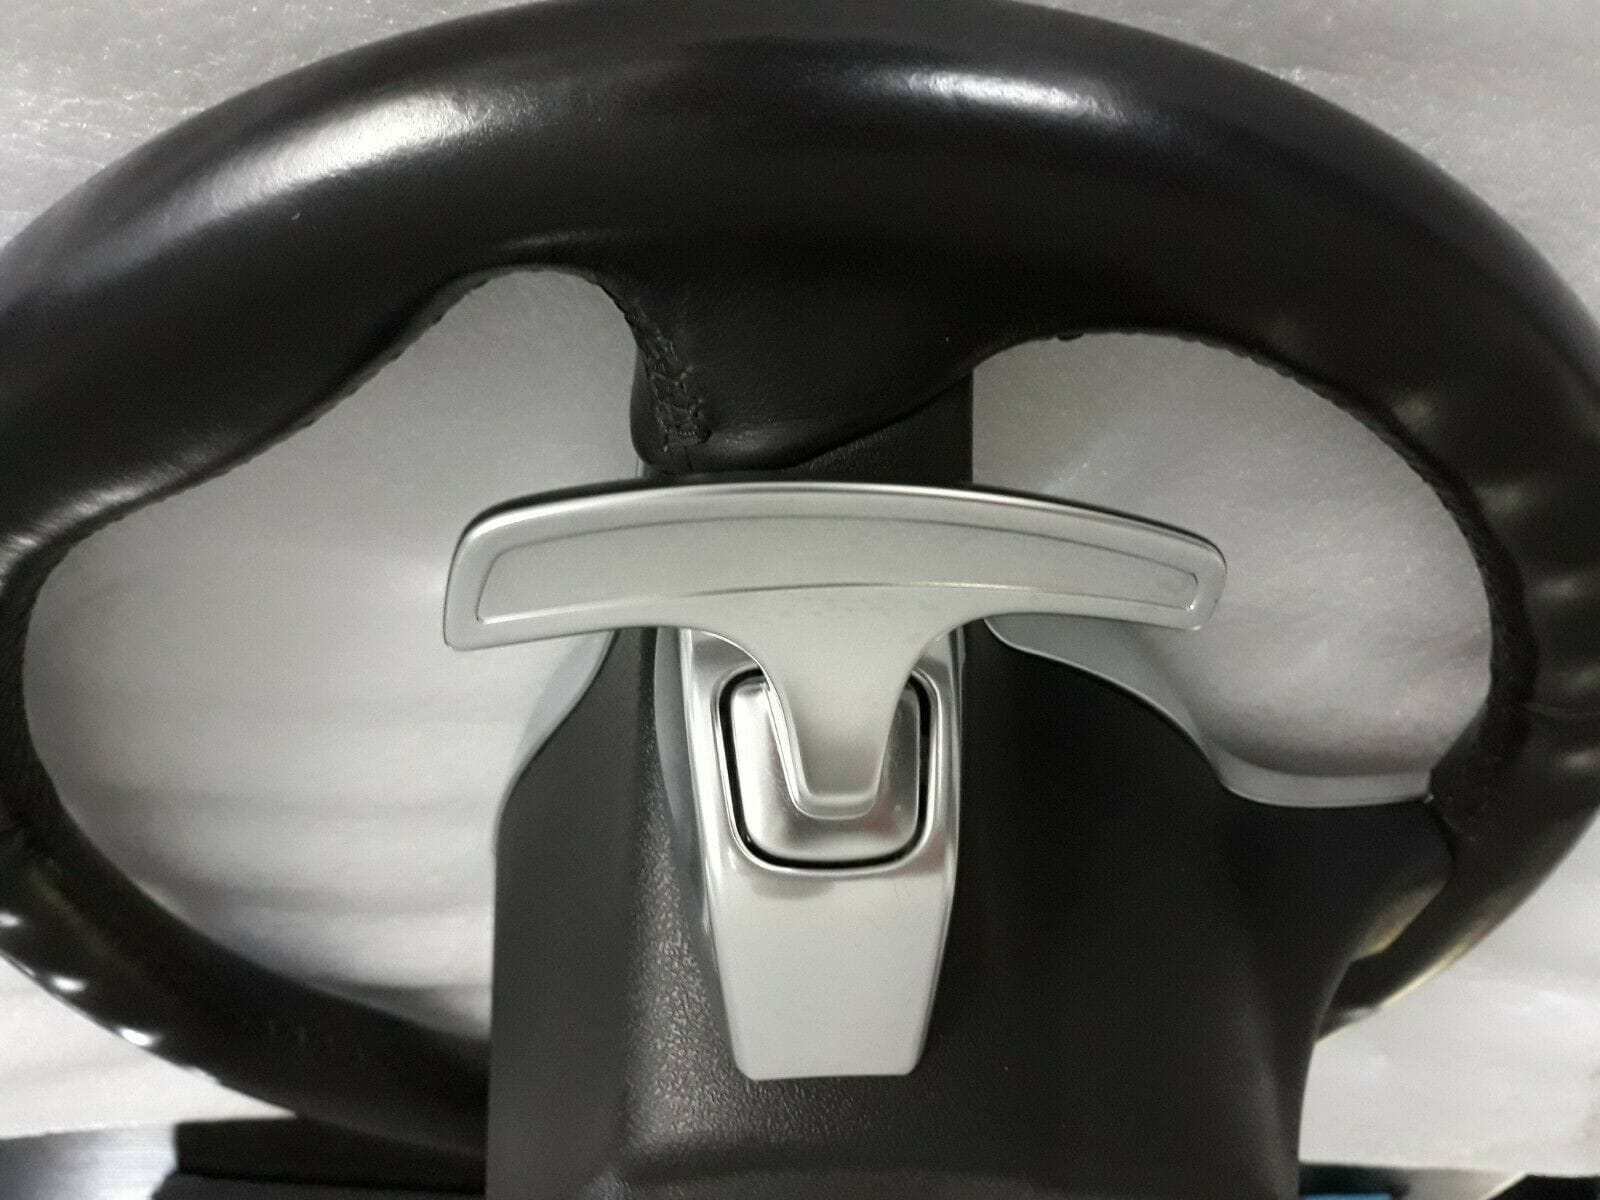 Steering/Suspension - OEM sport design steering wheel (with paddles) for 991, 997, 981, 987 - like new - Used - 9400, Belgium